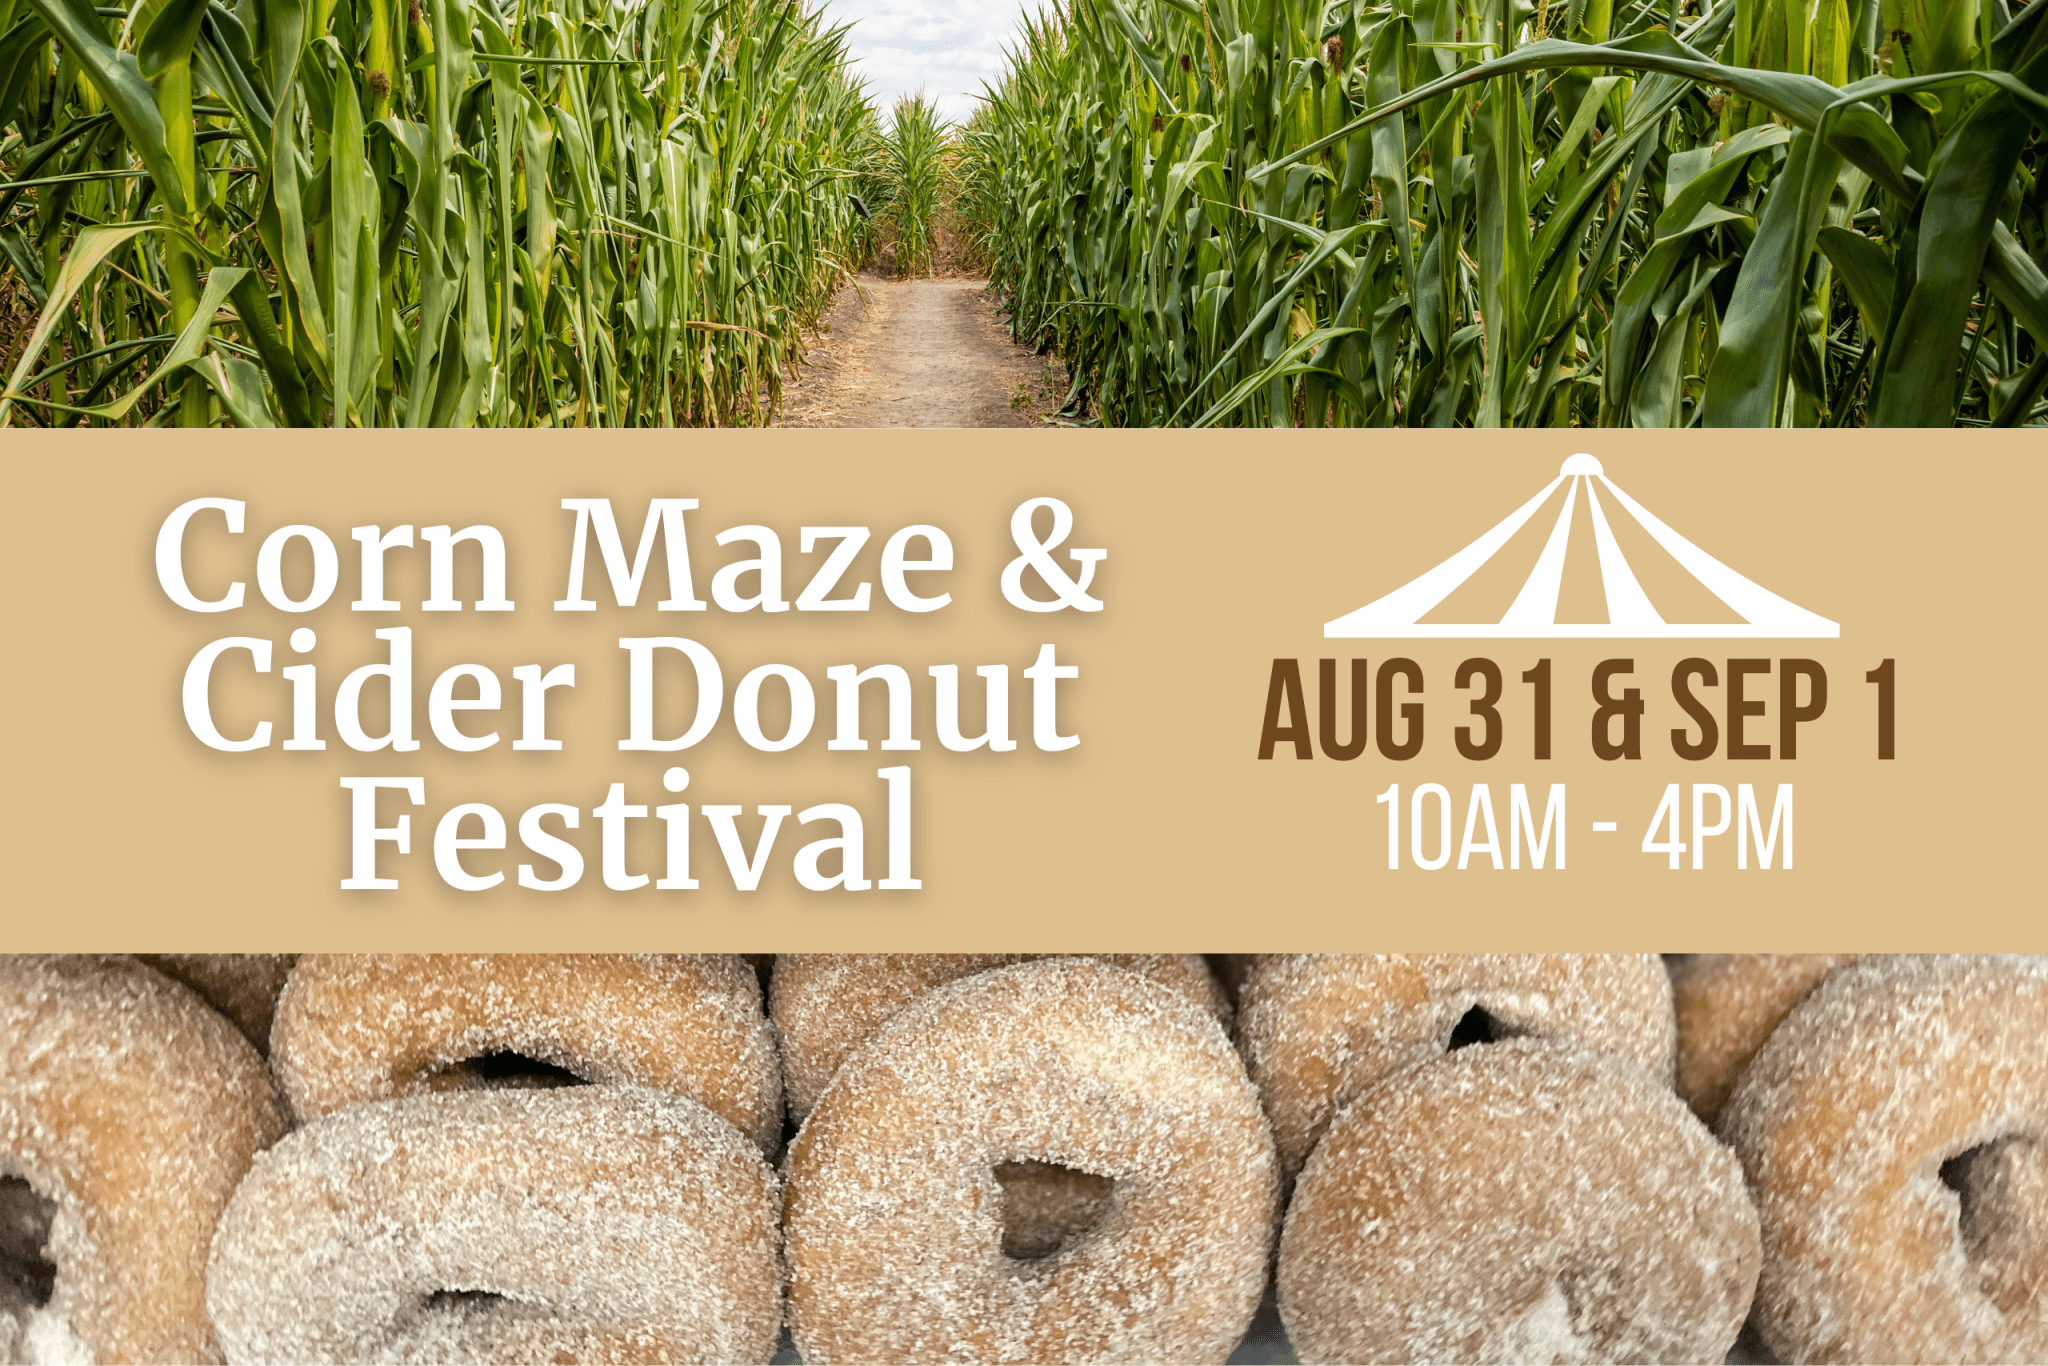 Corn Maze & Cider Donut Festival at Lyman Orchards